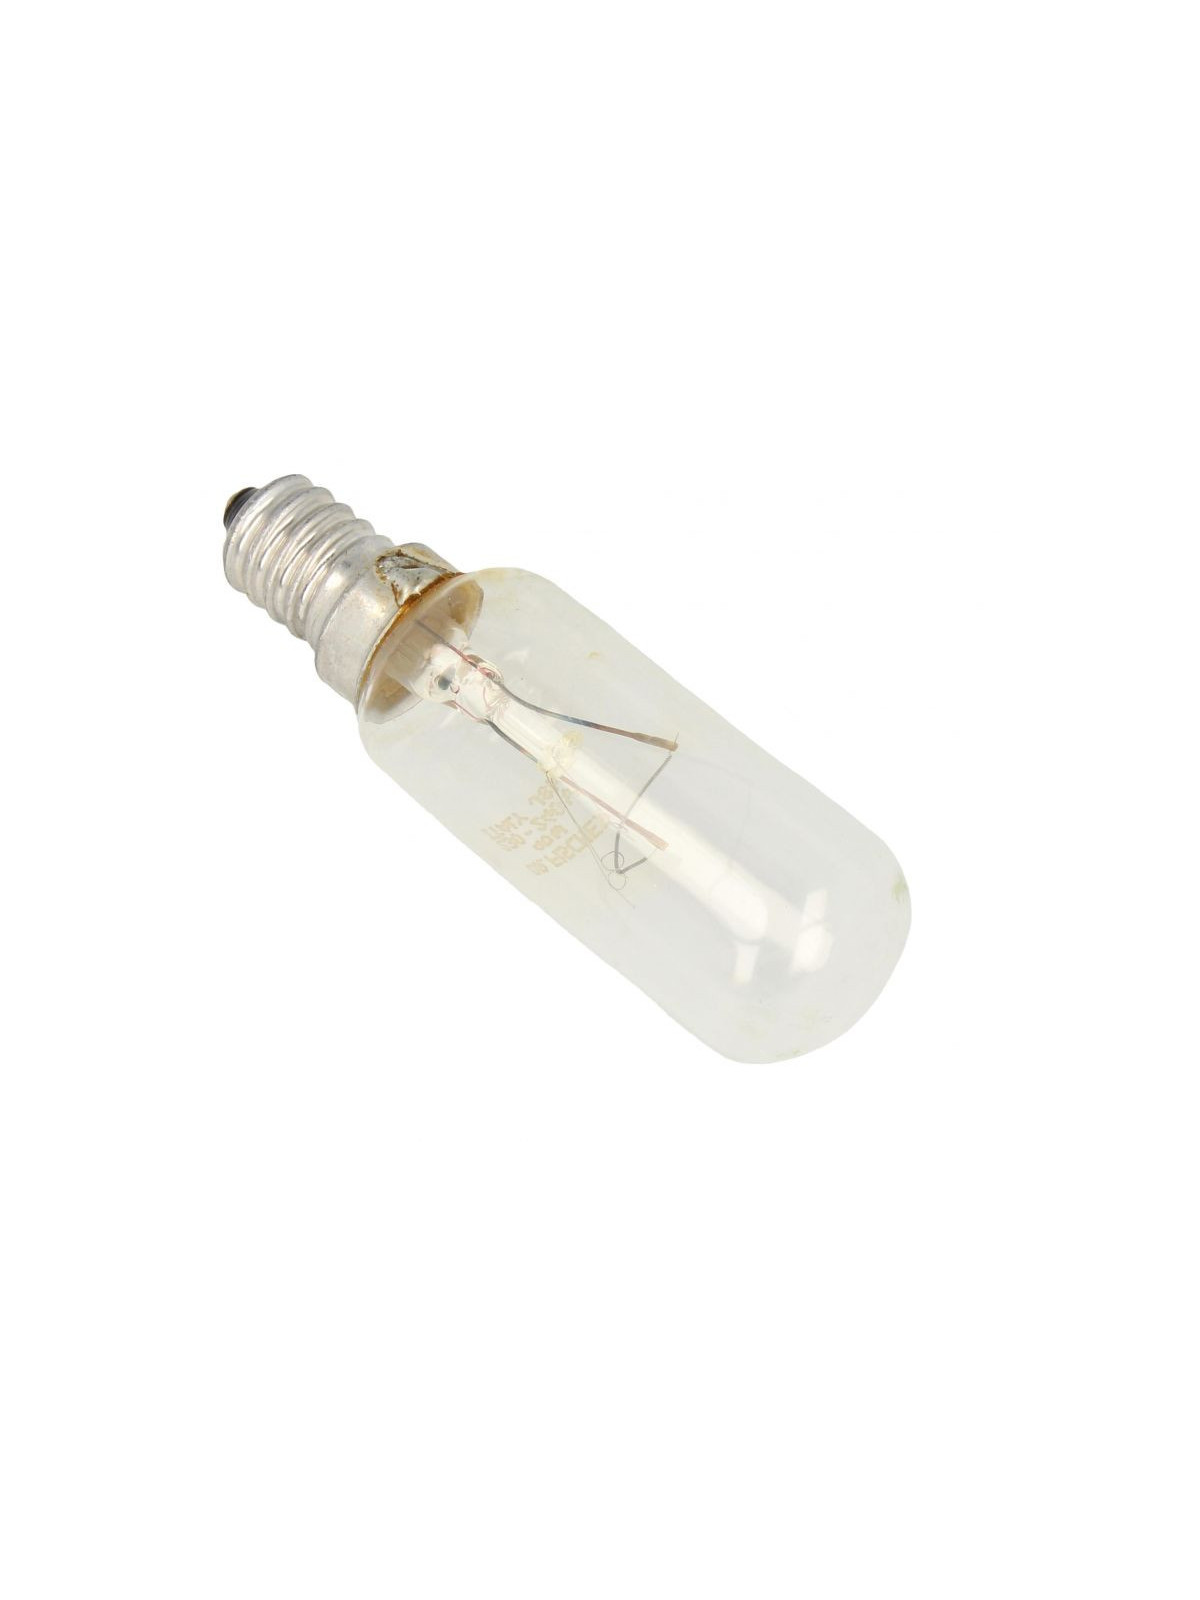 Lampe blanche 40W - E14 Bosch / Siemens - Réfrigérateur